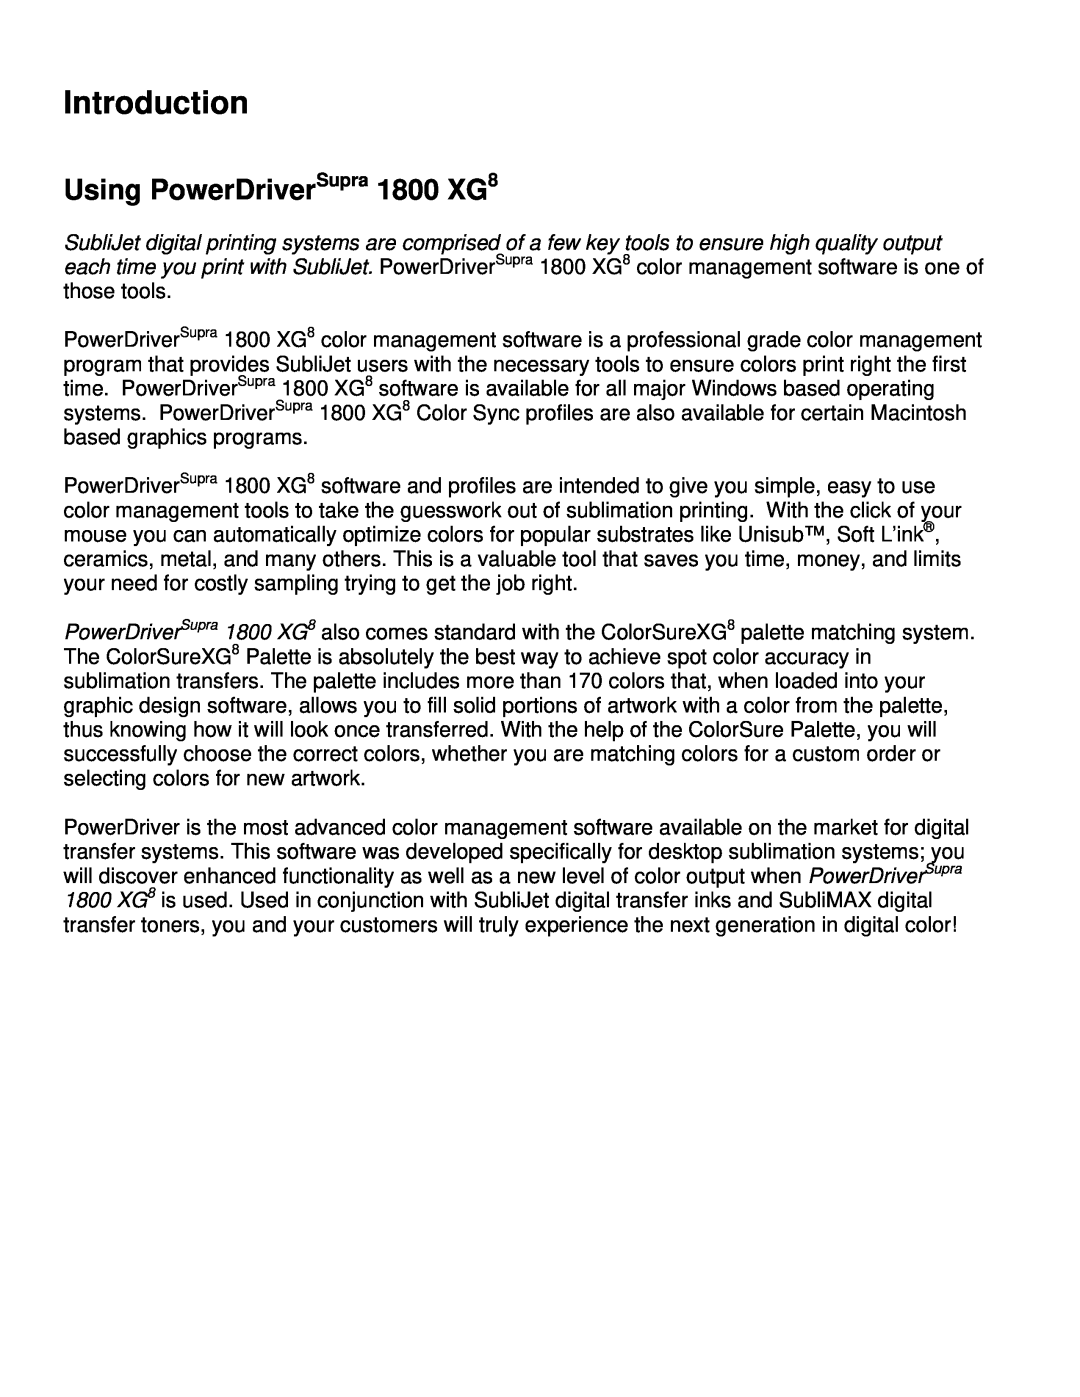 Epson R800, R1800 manual Introduction, Using PowerDriverSupra 1800 XG8 